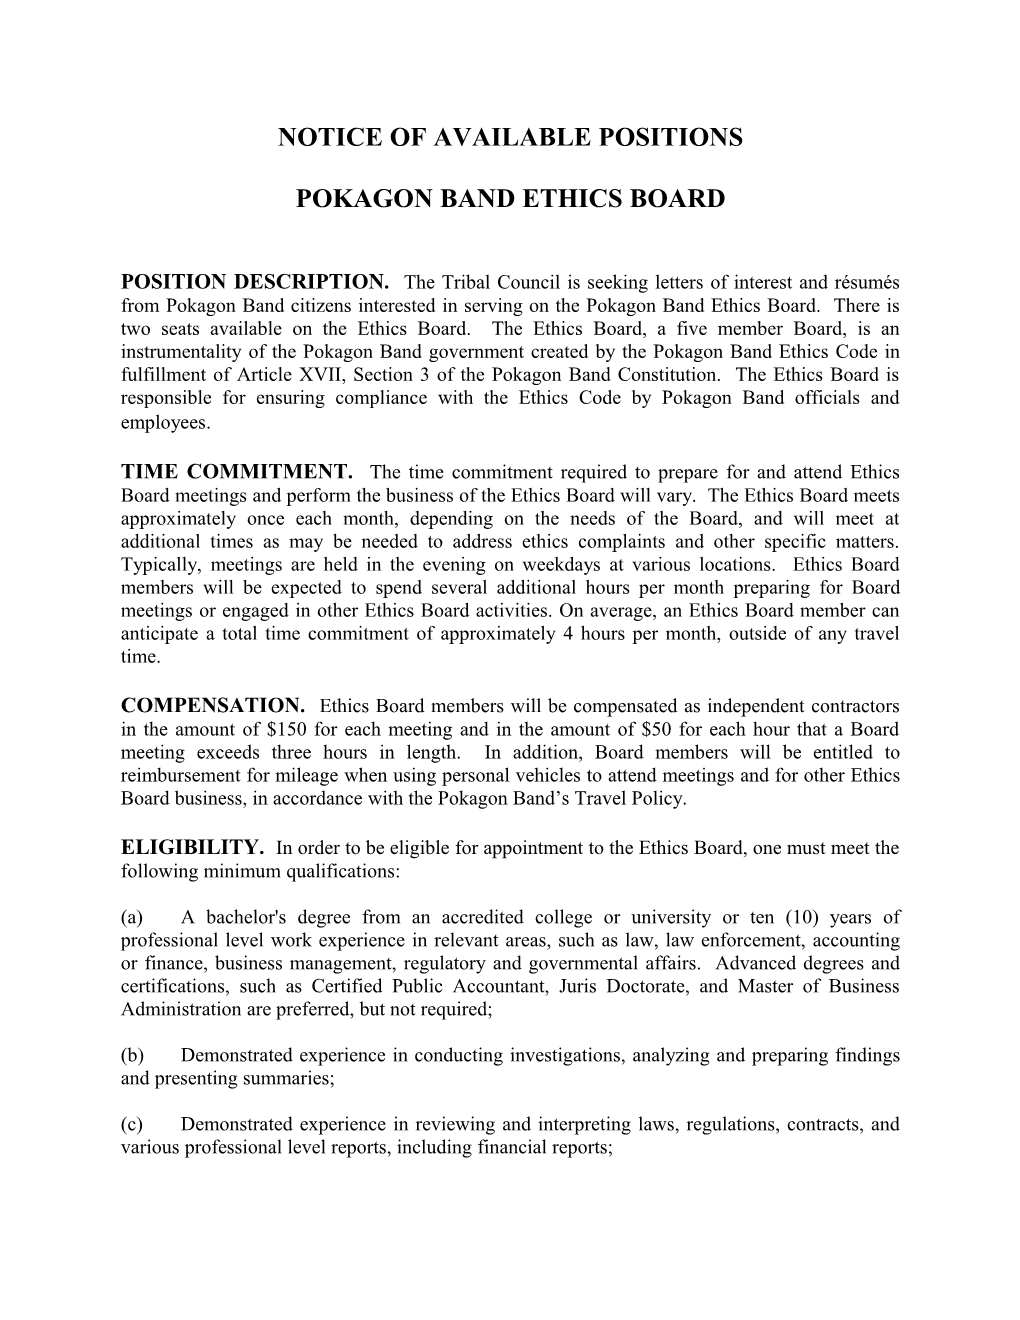 Pokagon Band Ethics Board